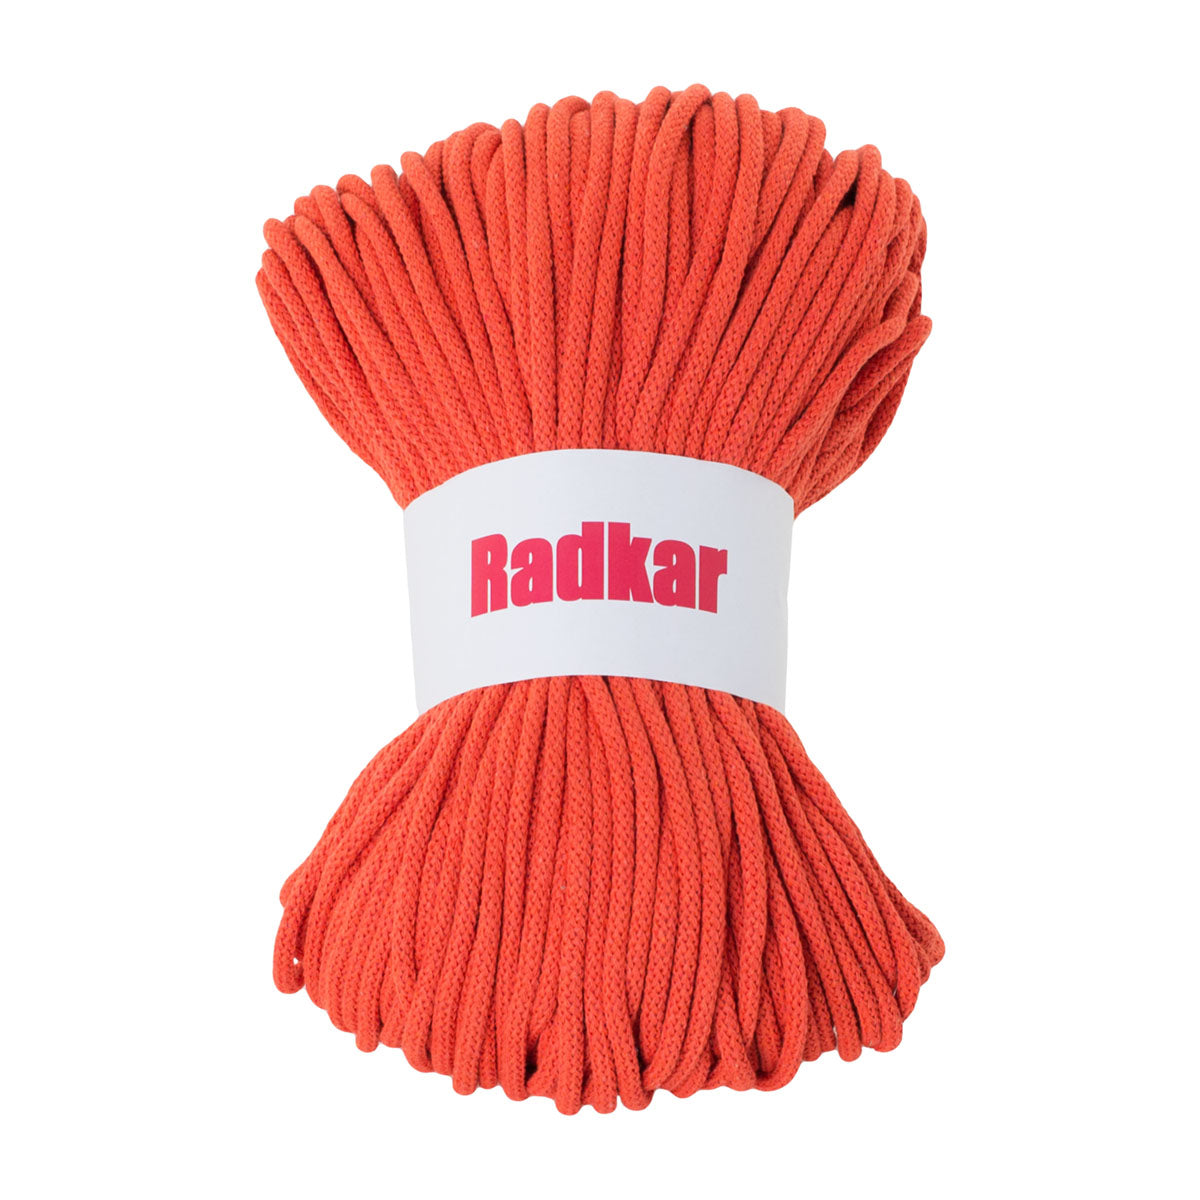 cotton cord braided 5mm orange radkar macrame handmade crochet knitting weaving 